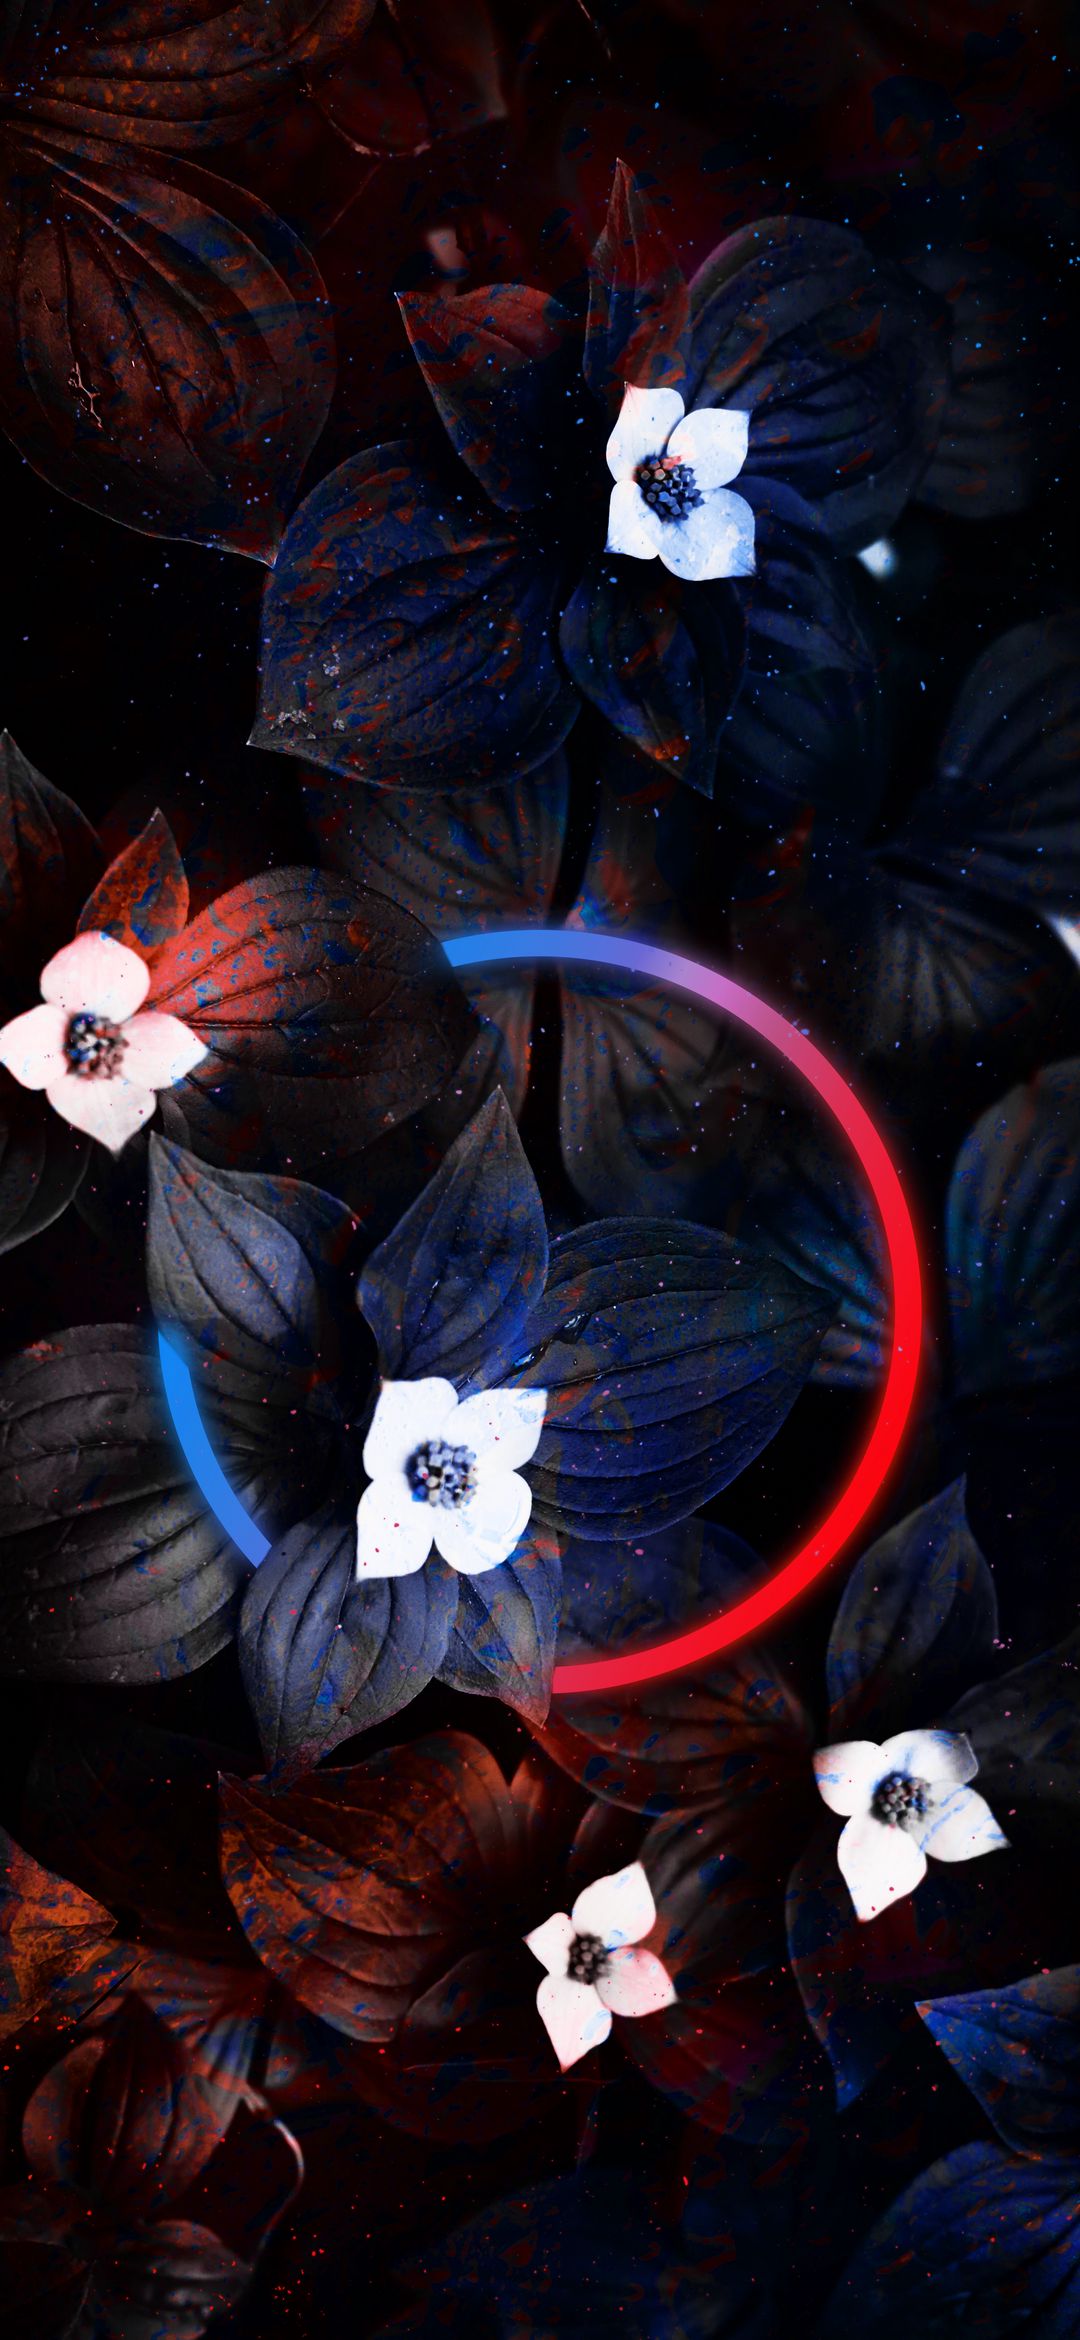 30000 Dark Flowers Pictures  Download Free Images on Unsplash